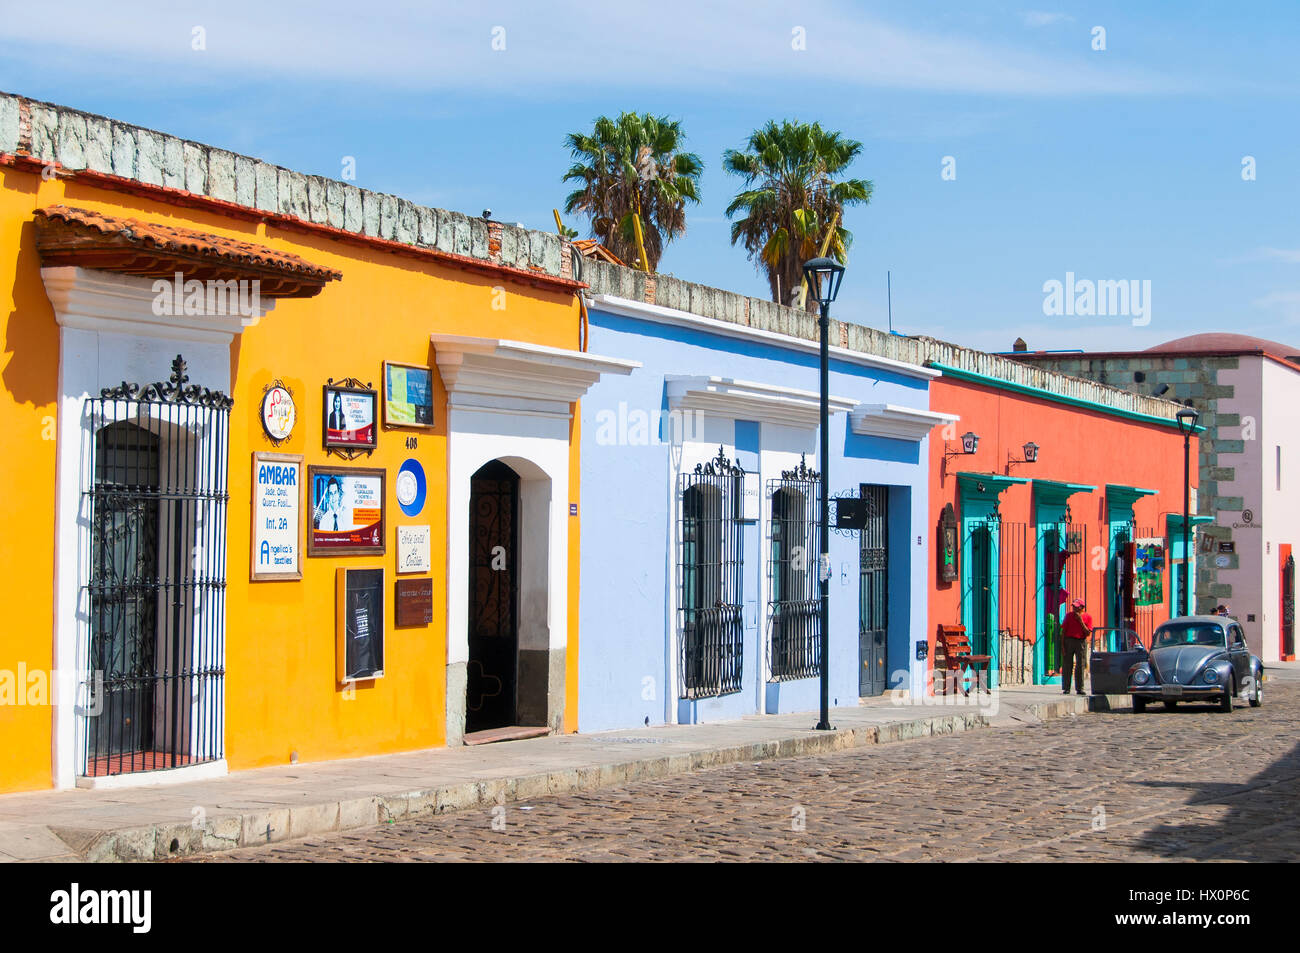 Carretera con coloridas casas coloniales, centro, Oaxaca, México Foto de stock